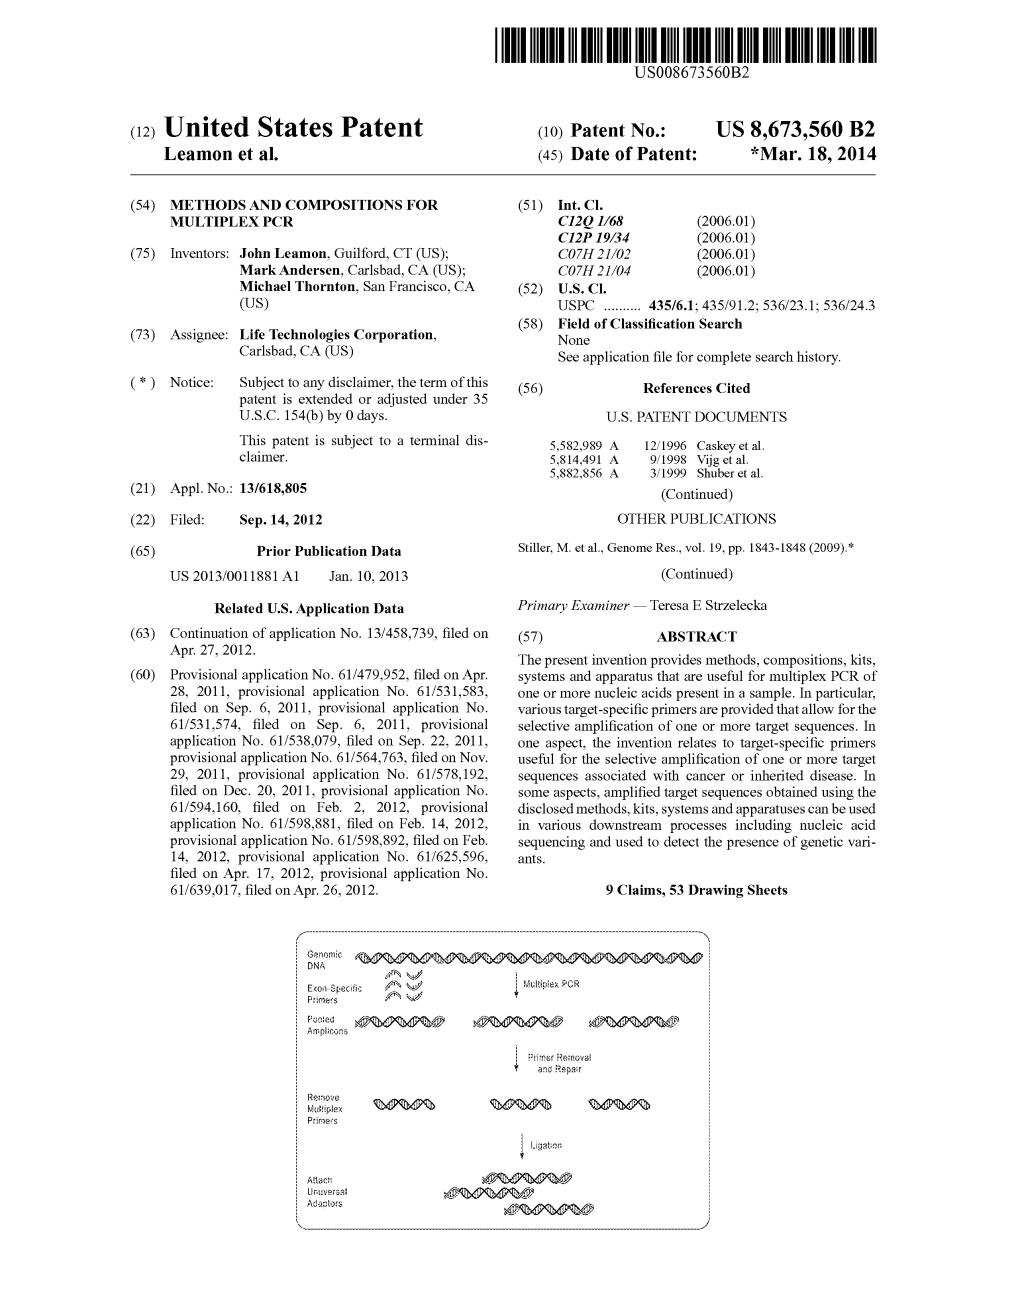 (12) United States Patent (10) Patent No.: US 8,673,560 B2 Leamon Et Al